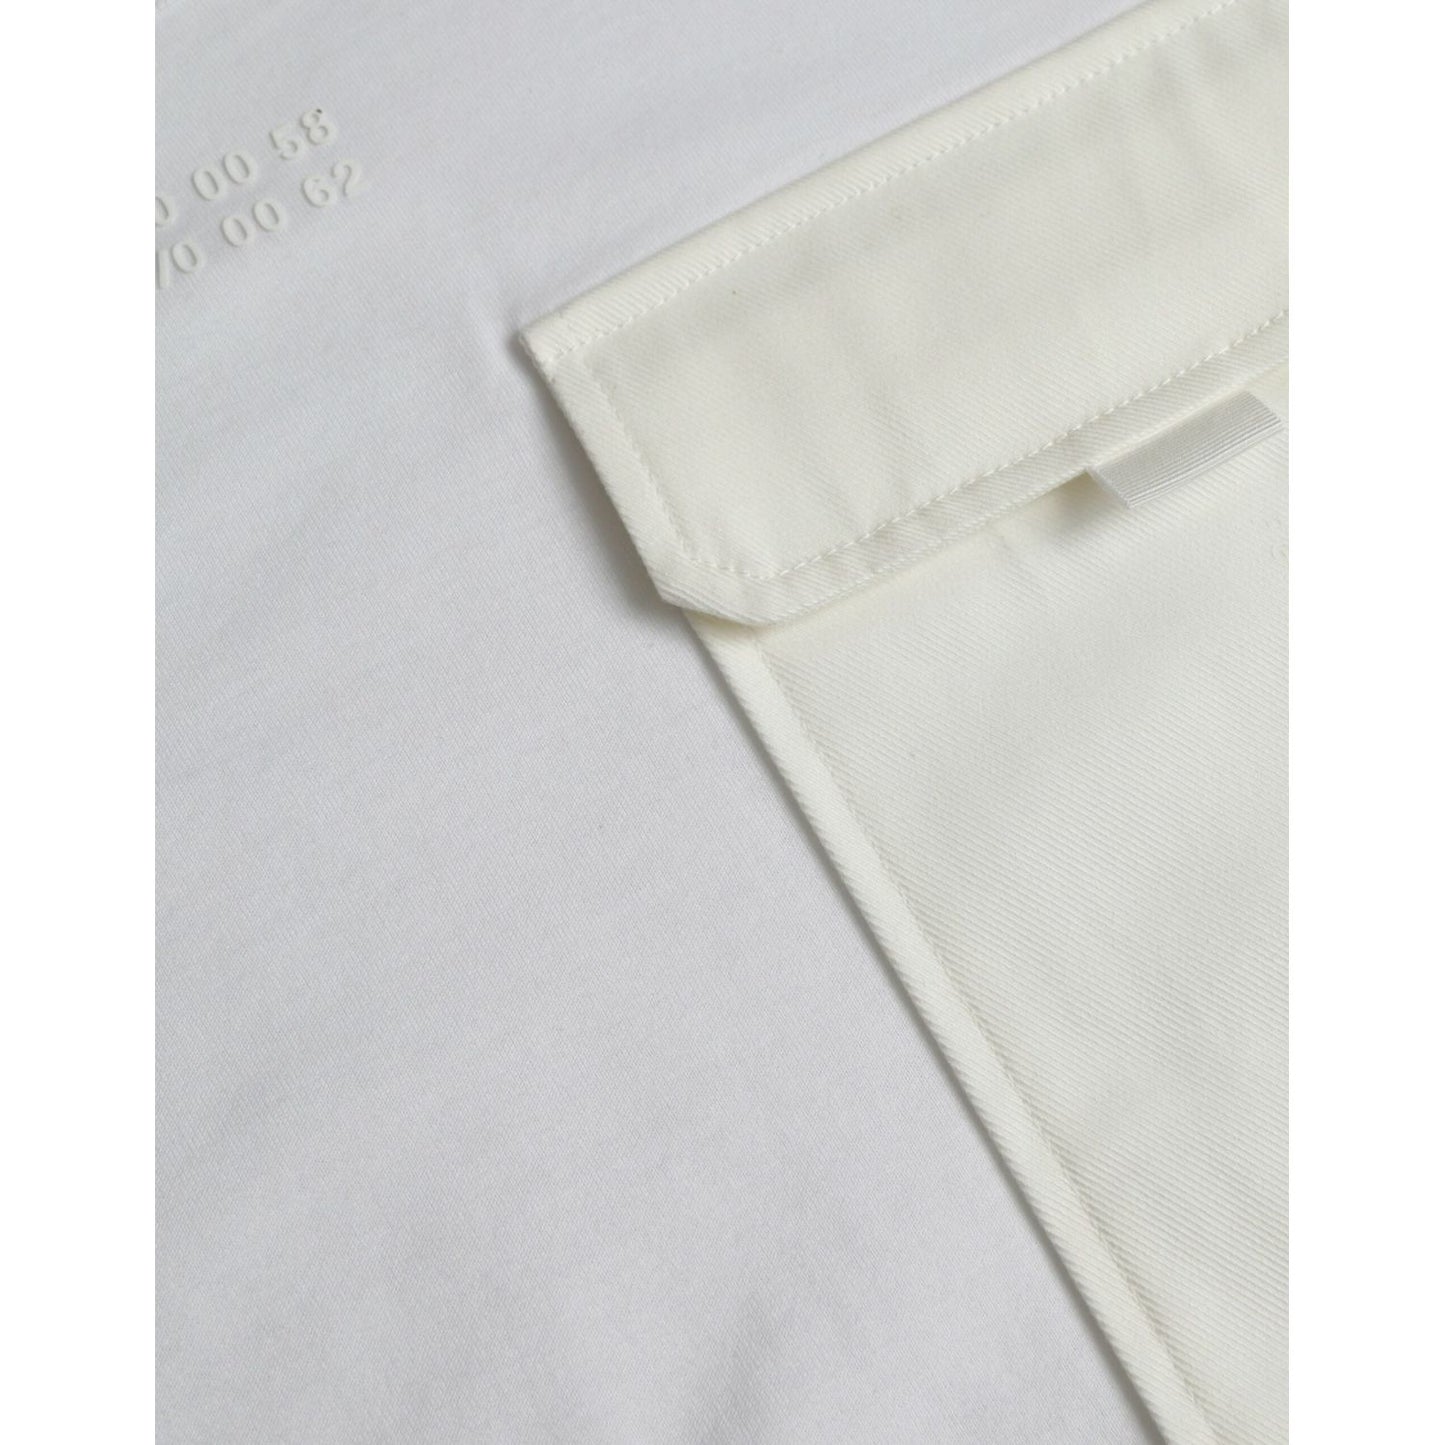 Dolce & Gabbana White Cotton Pocket Short Sleeves T-shirt white-cotton-pocket-short-sleeves-t-shirt